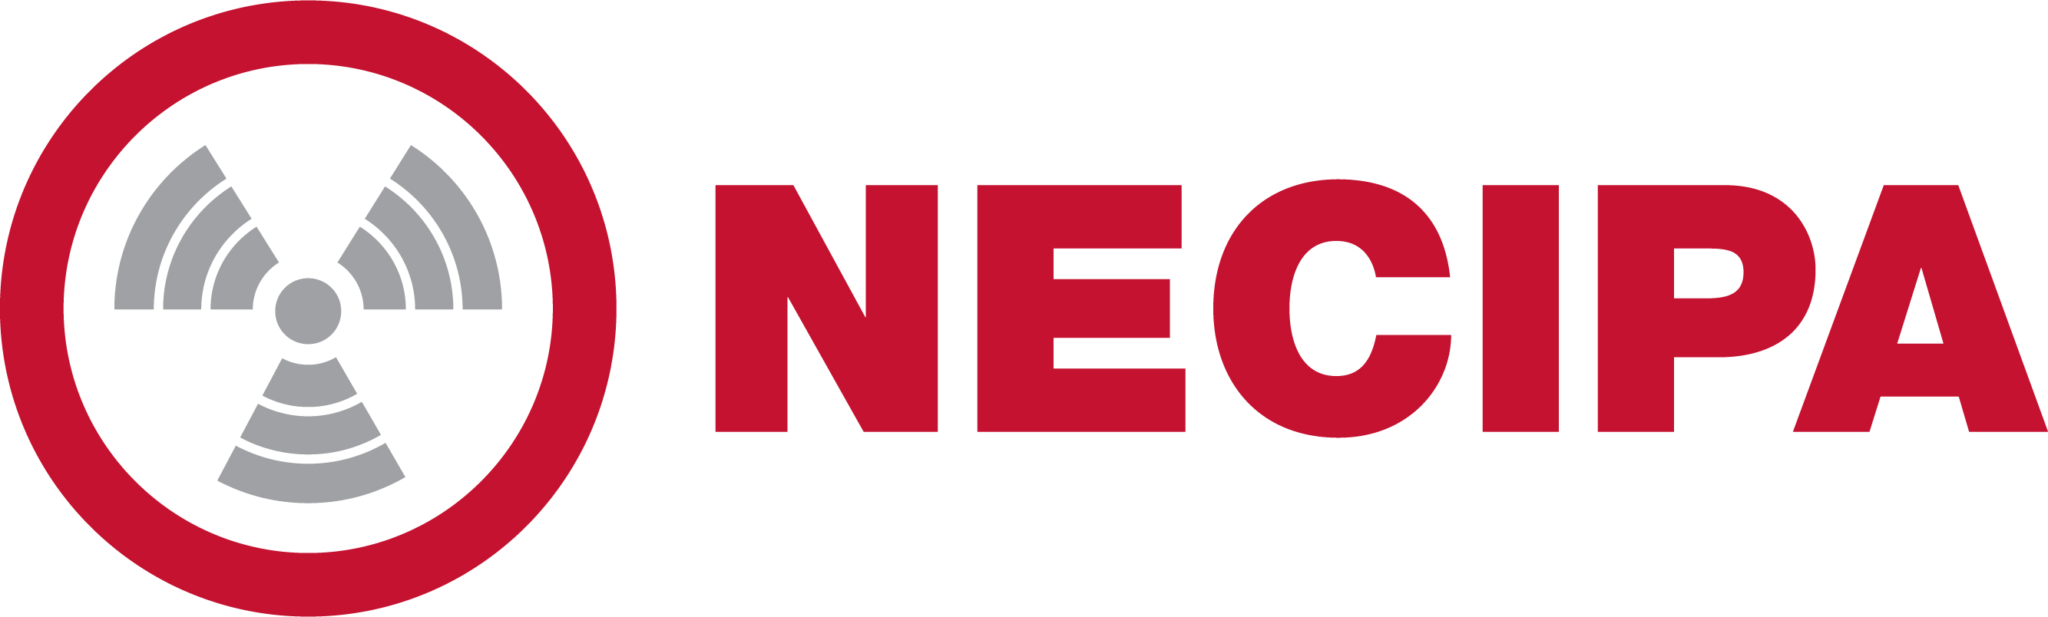 logomarca-necipa.png